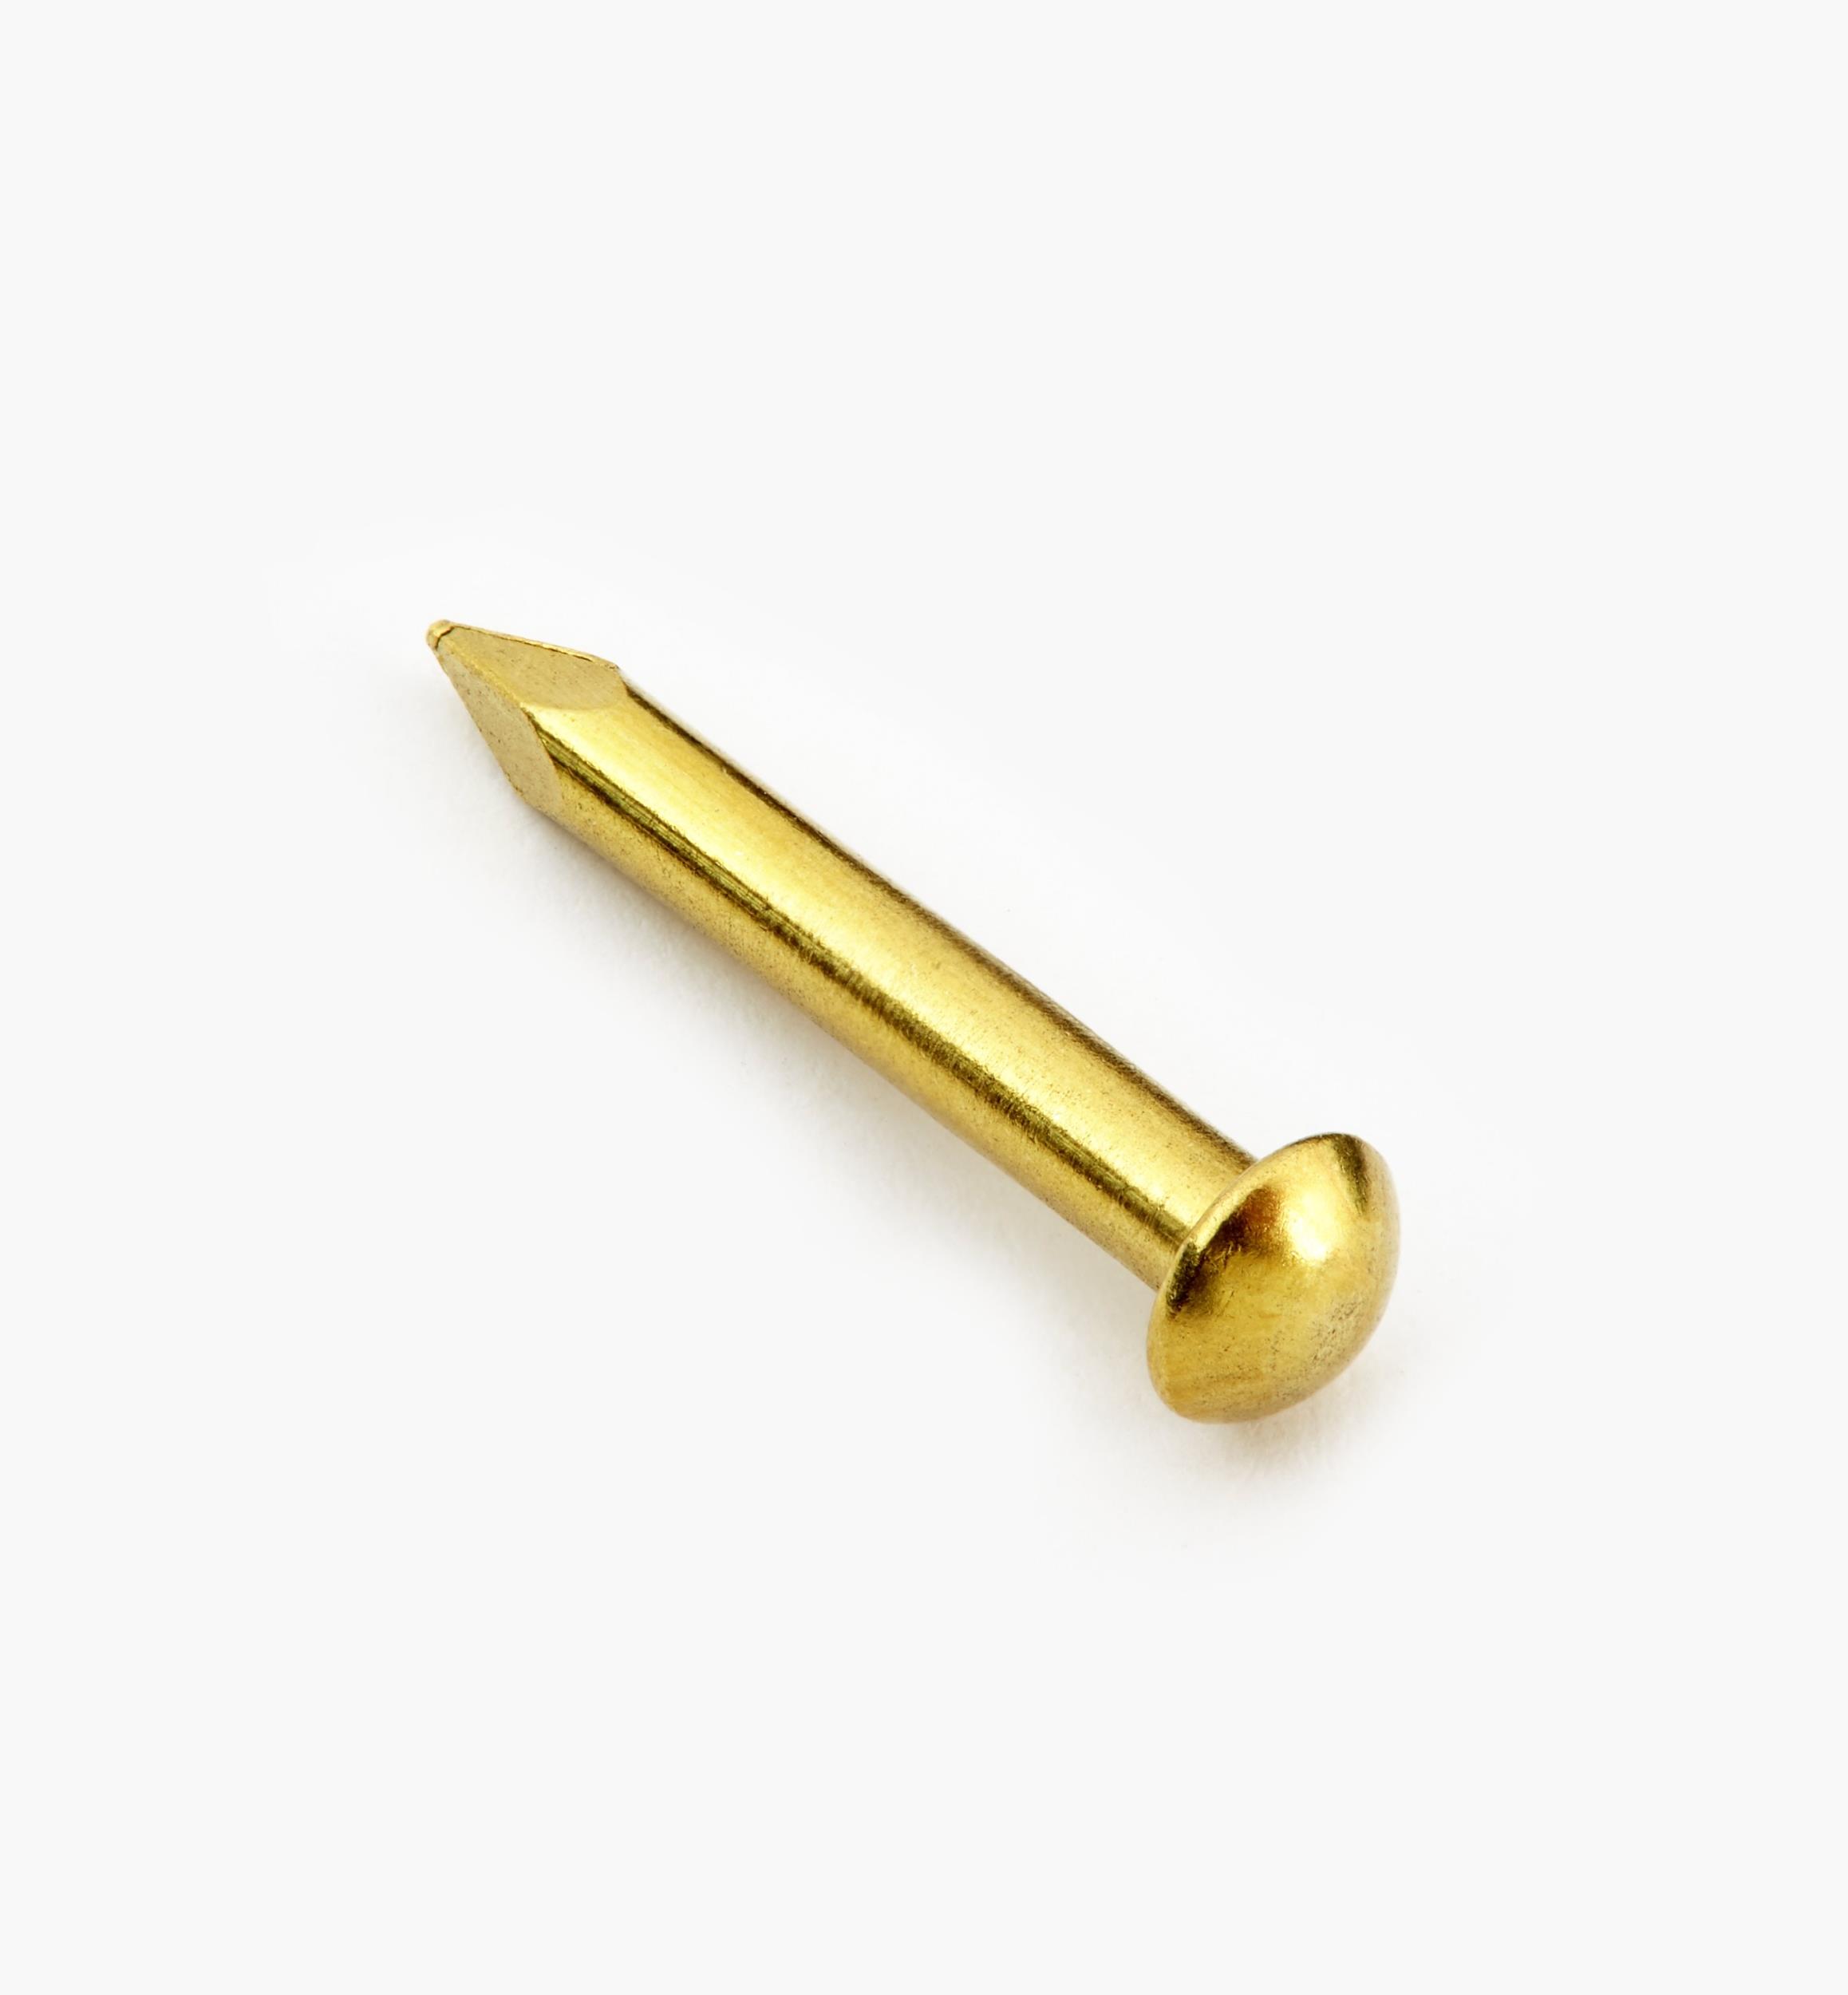 3/8” SOLID BRASS BRADS 100 NAILS small head 18 gauge Escutcheon pins USA made! 